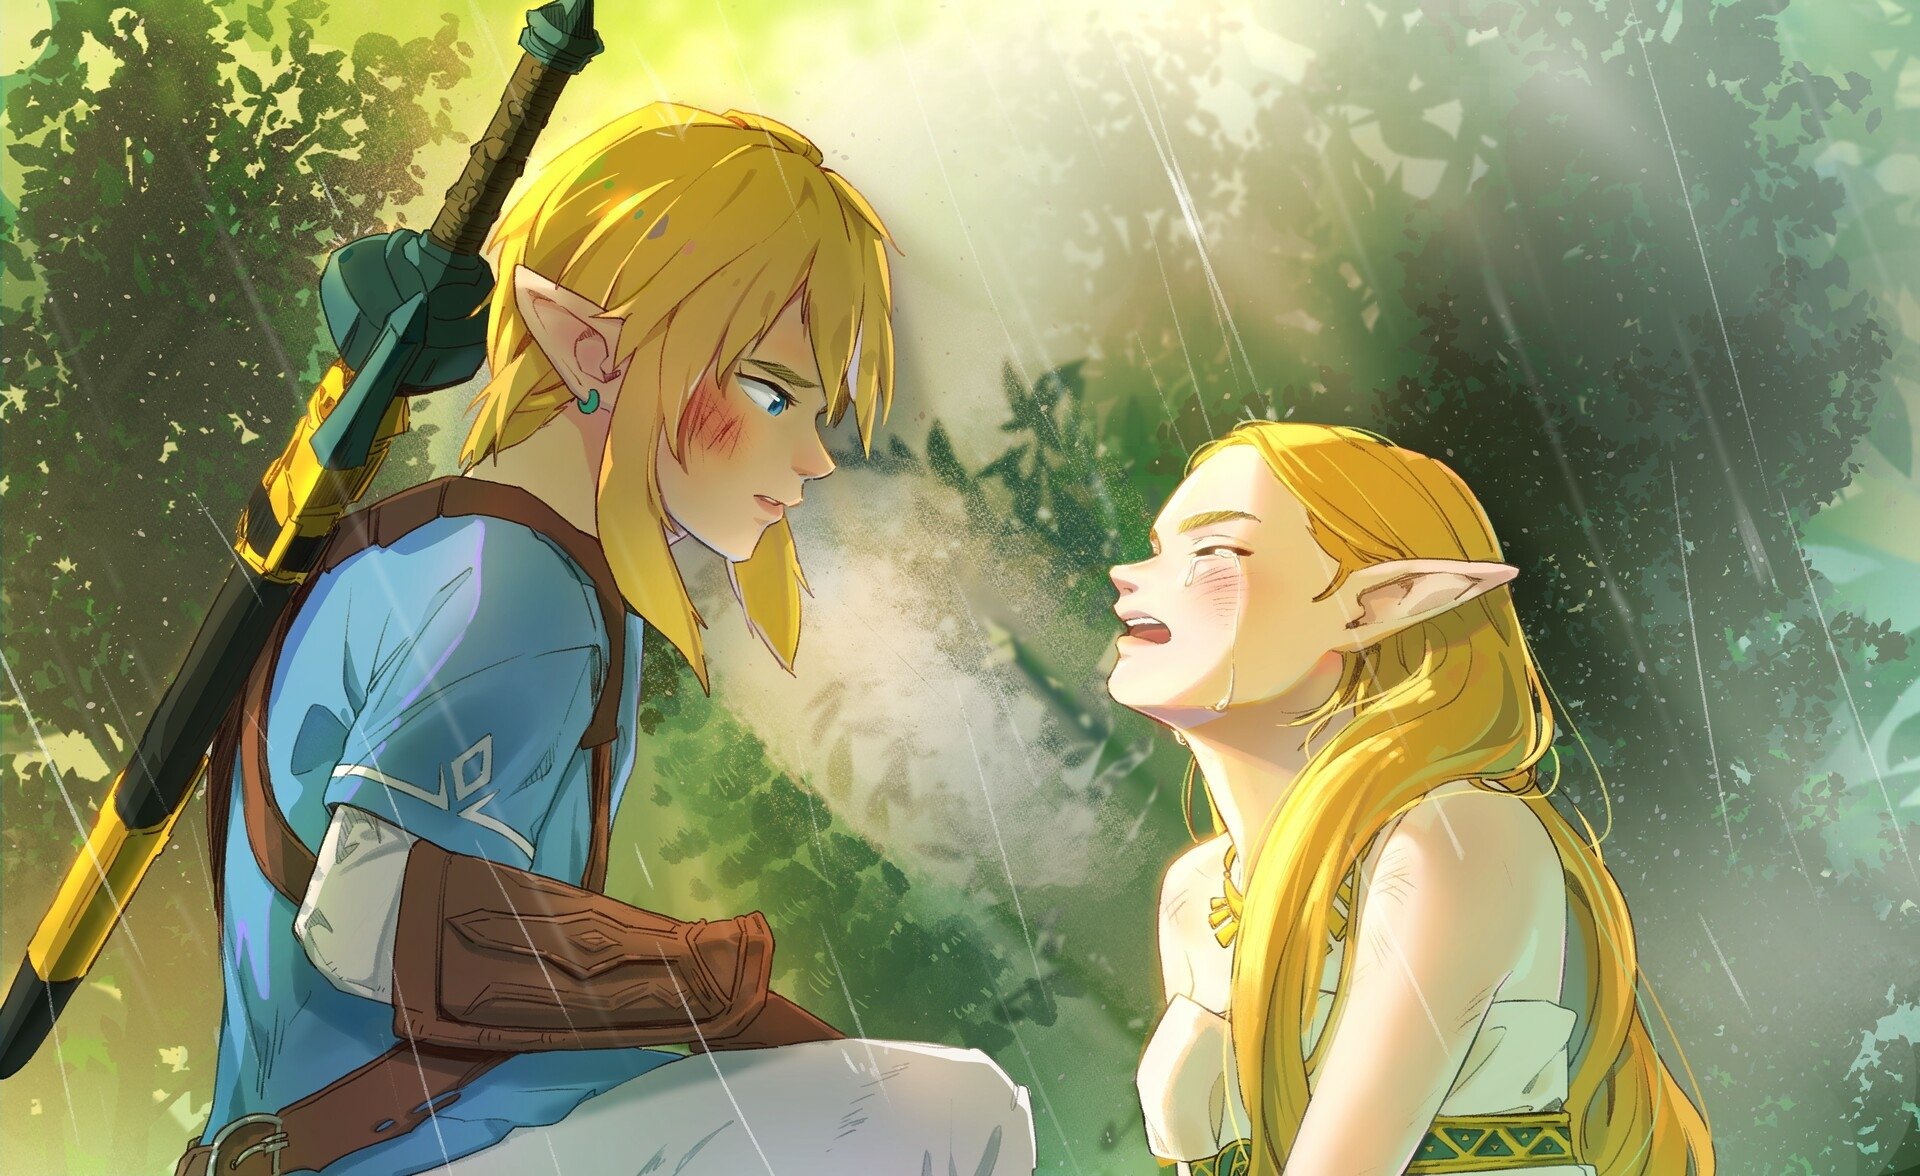 Link & Zelda by booriboori